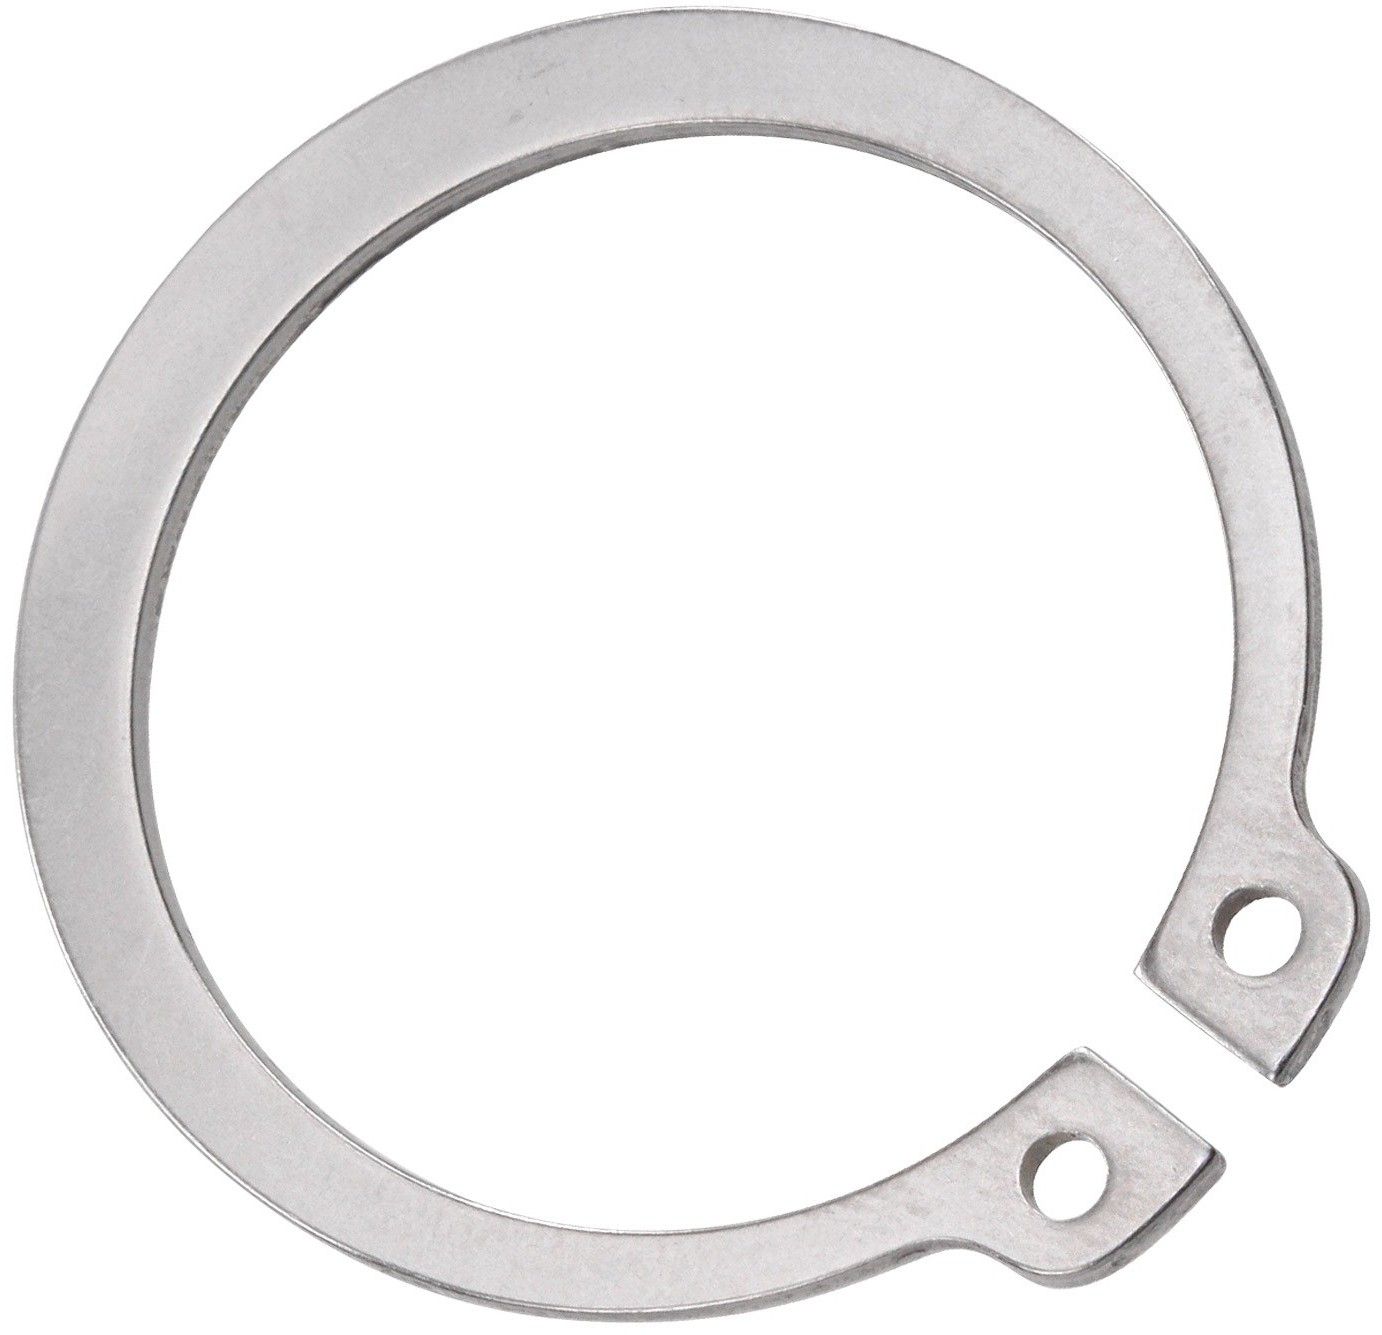 Кольцо стопорное наружное 72х2,5 DIN 471, нержавеющая сталь 1.4122 (А2) - фото